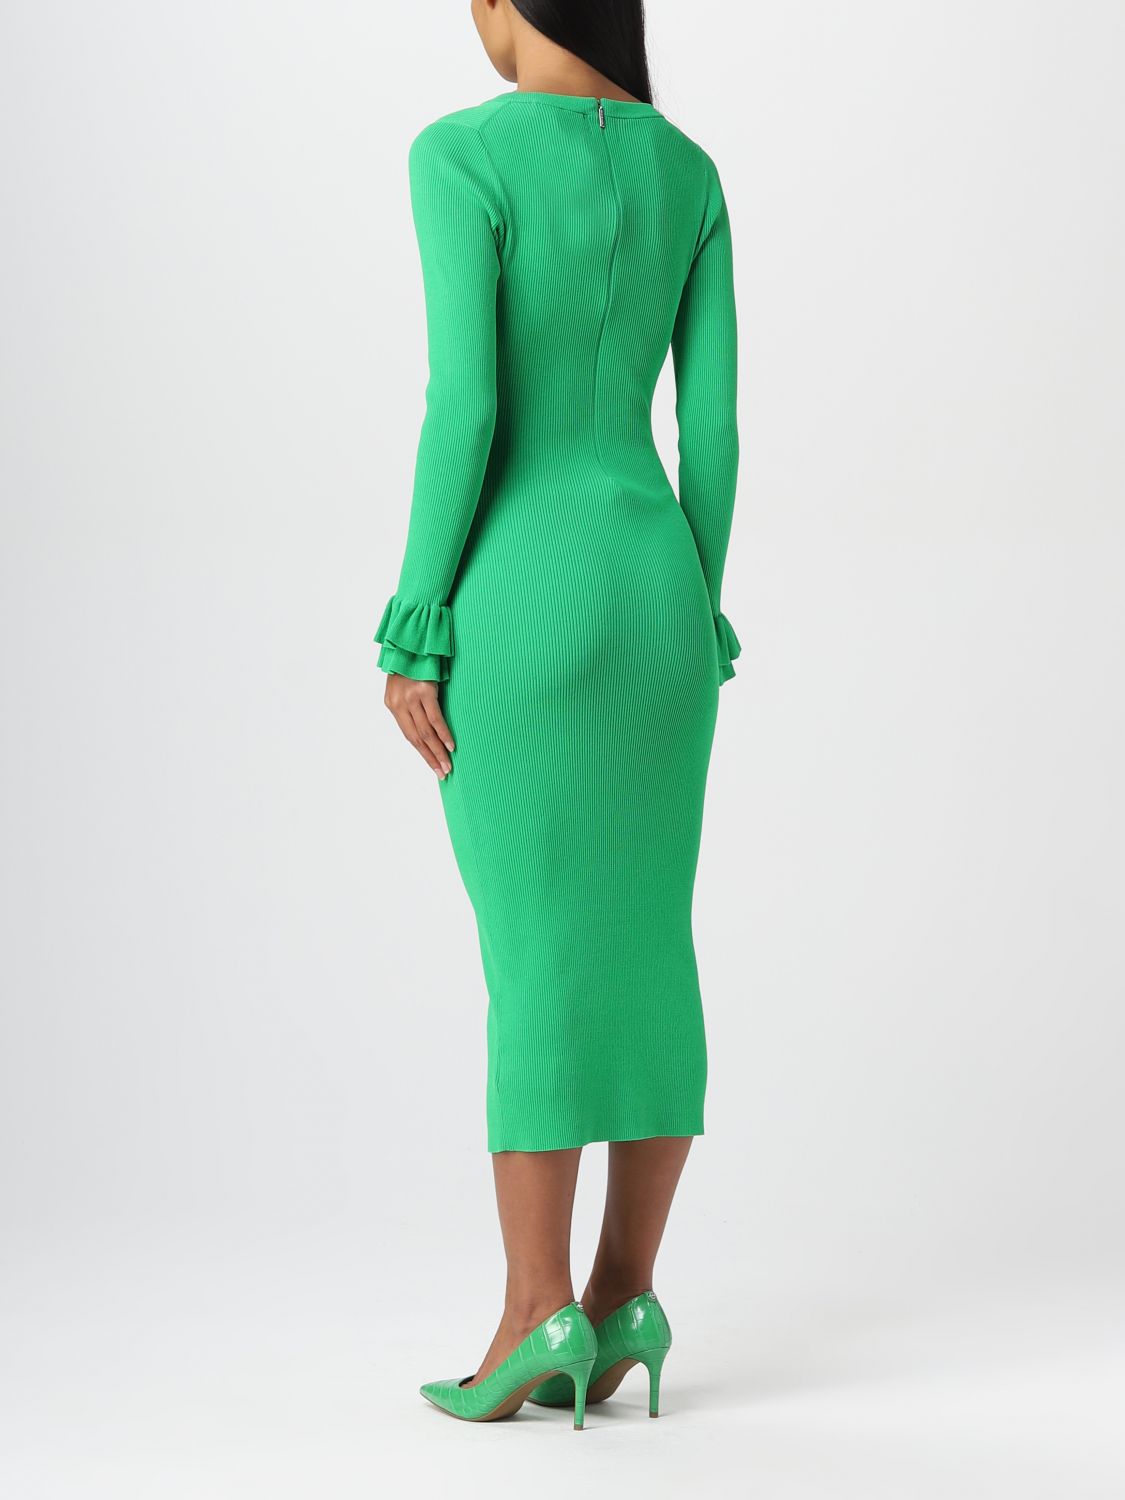 MICHAEL KORS: dress for woman - Green | Michael Kors dress MF281EM33D  online on 